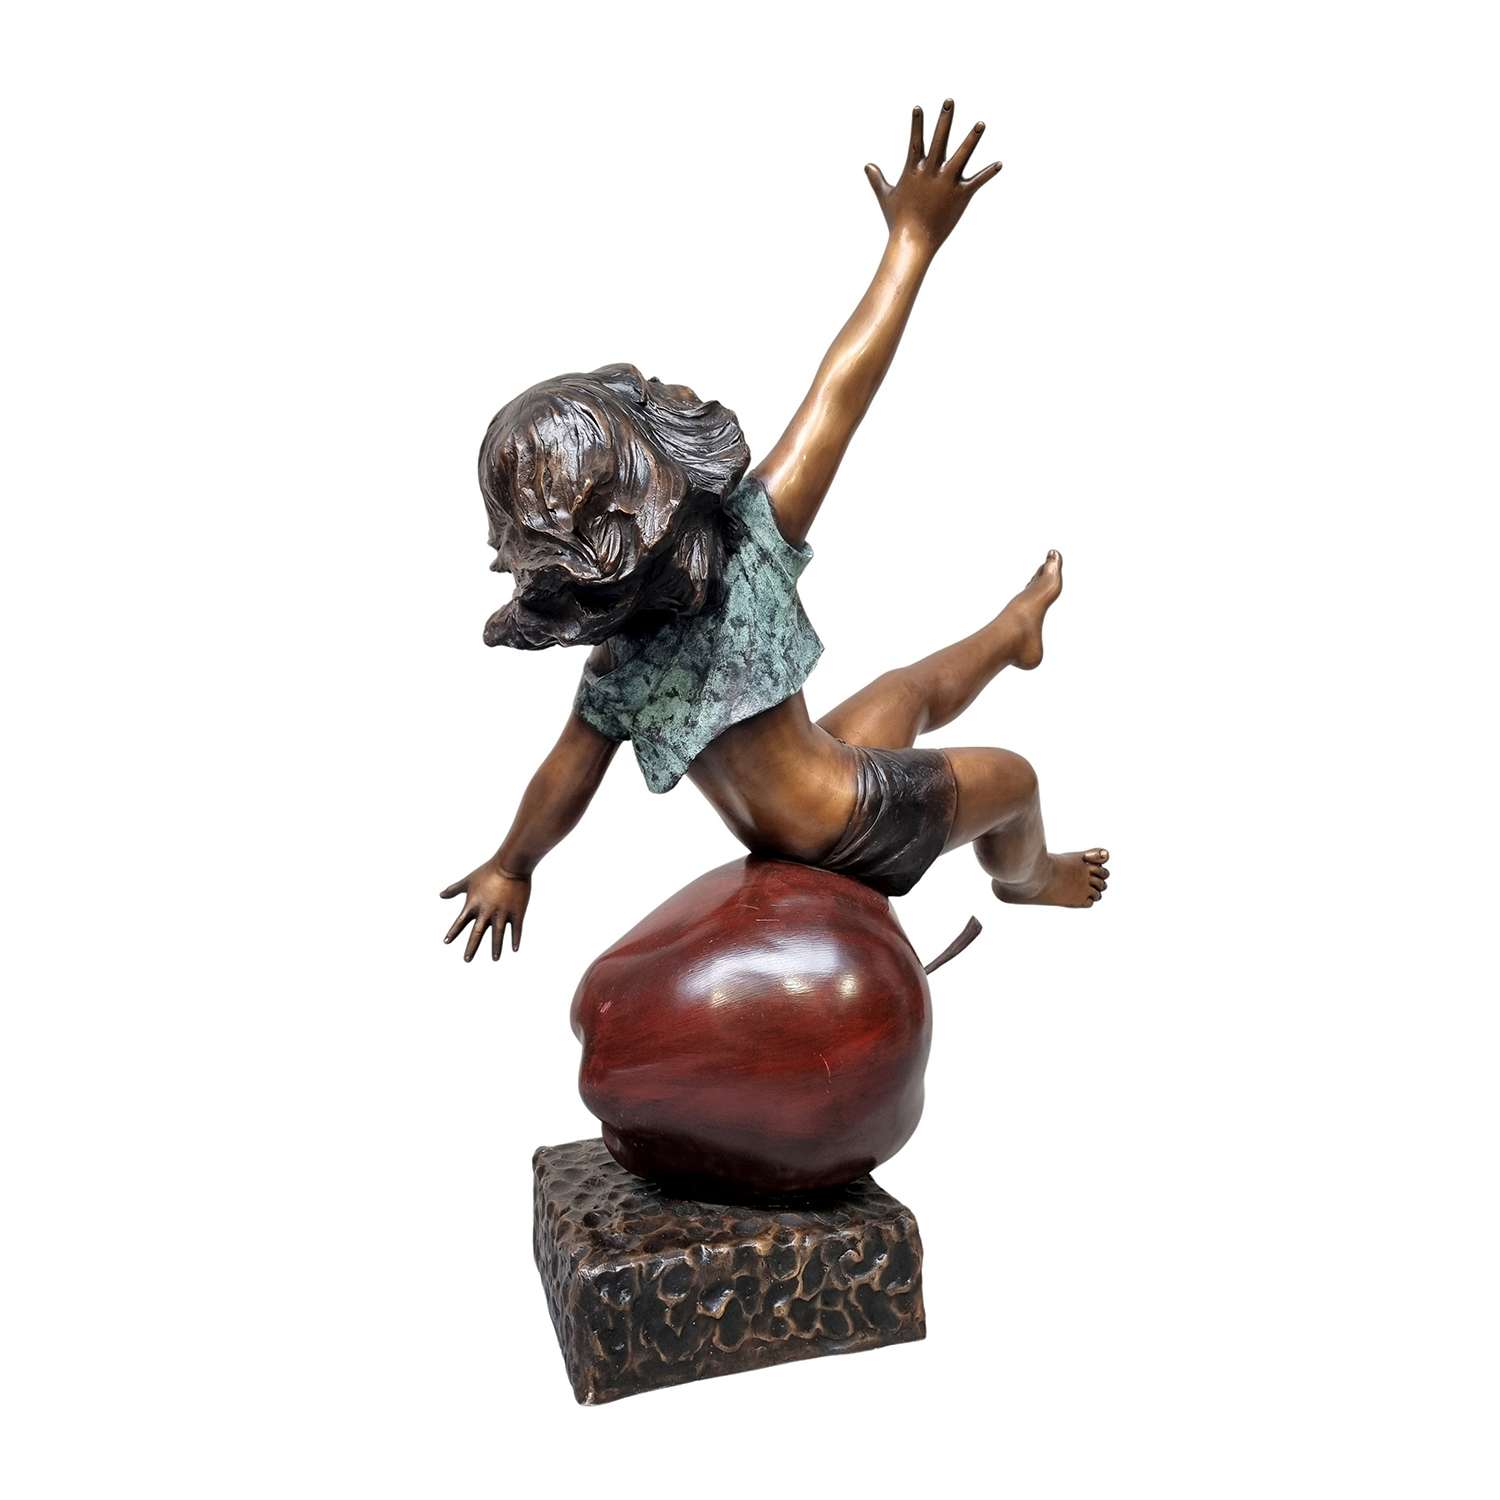 Girl Sitting on an Apple Sculpture